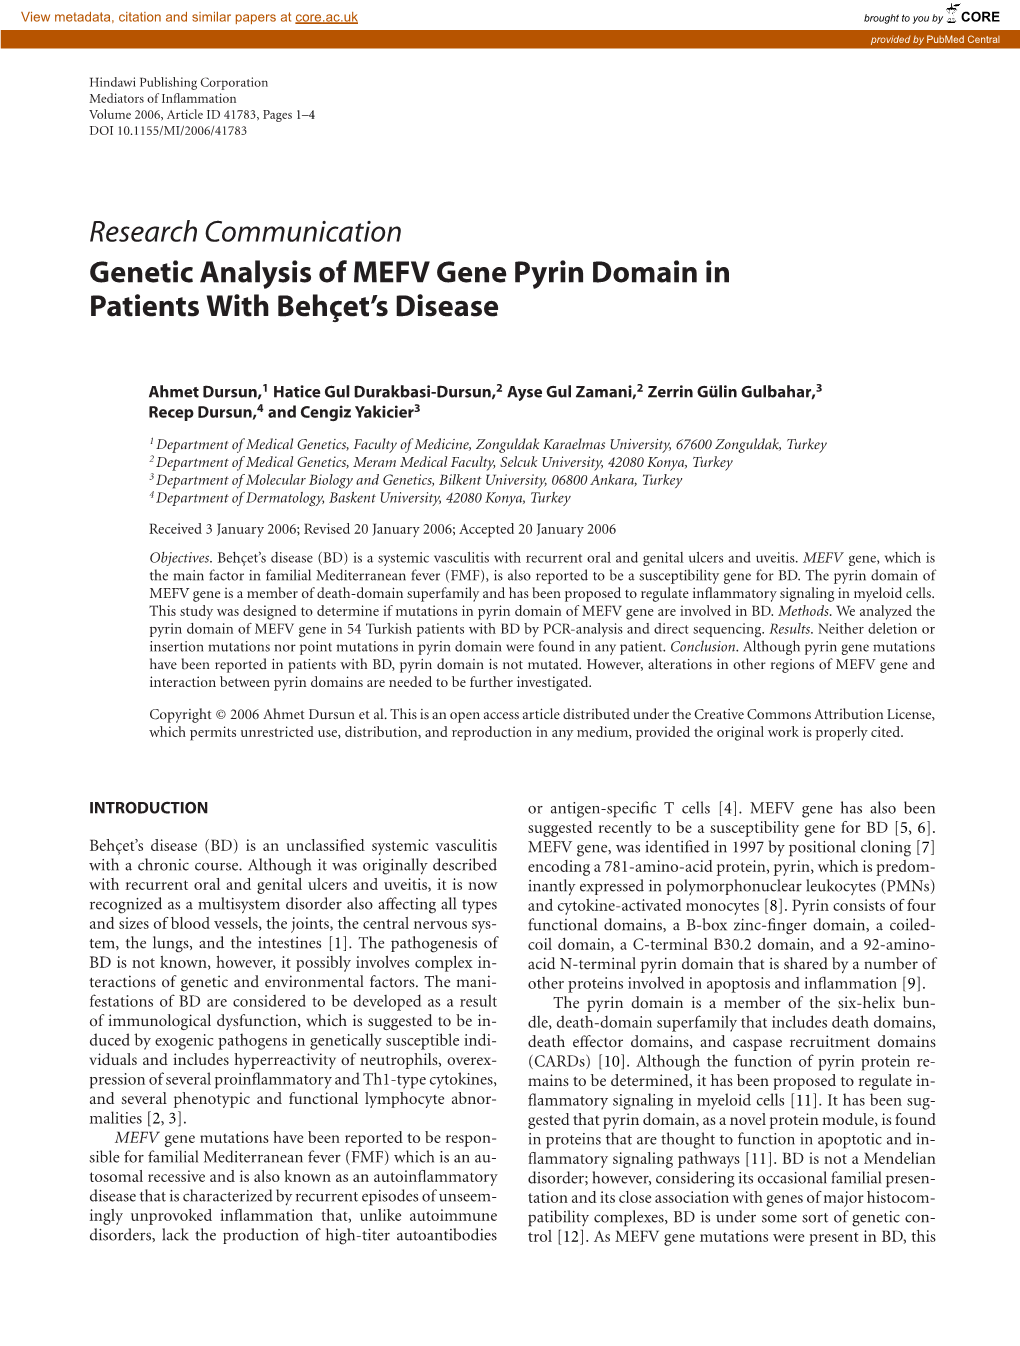 Genetic Analysis of MEFV Gene Pyrin Domain in Patients with Behçet's